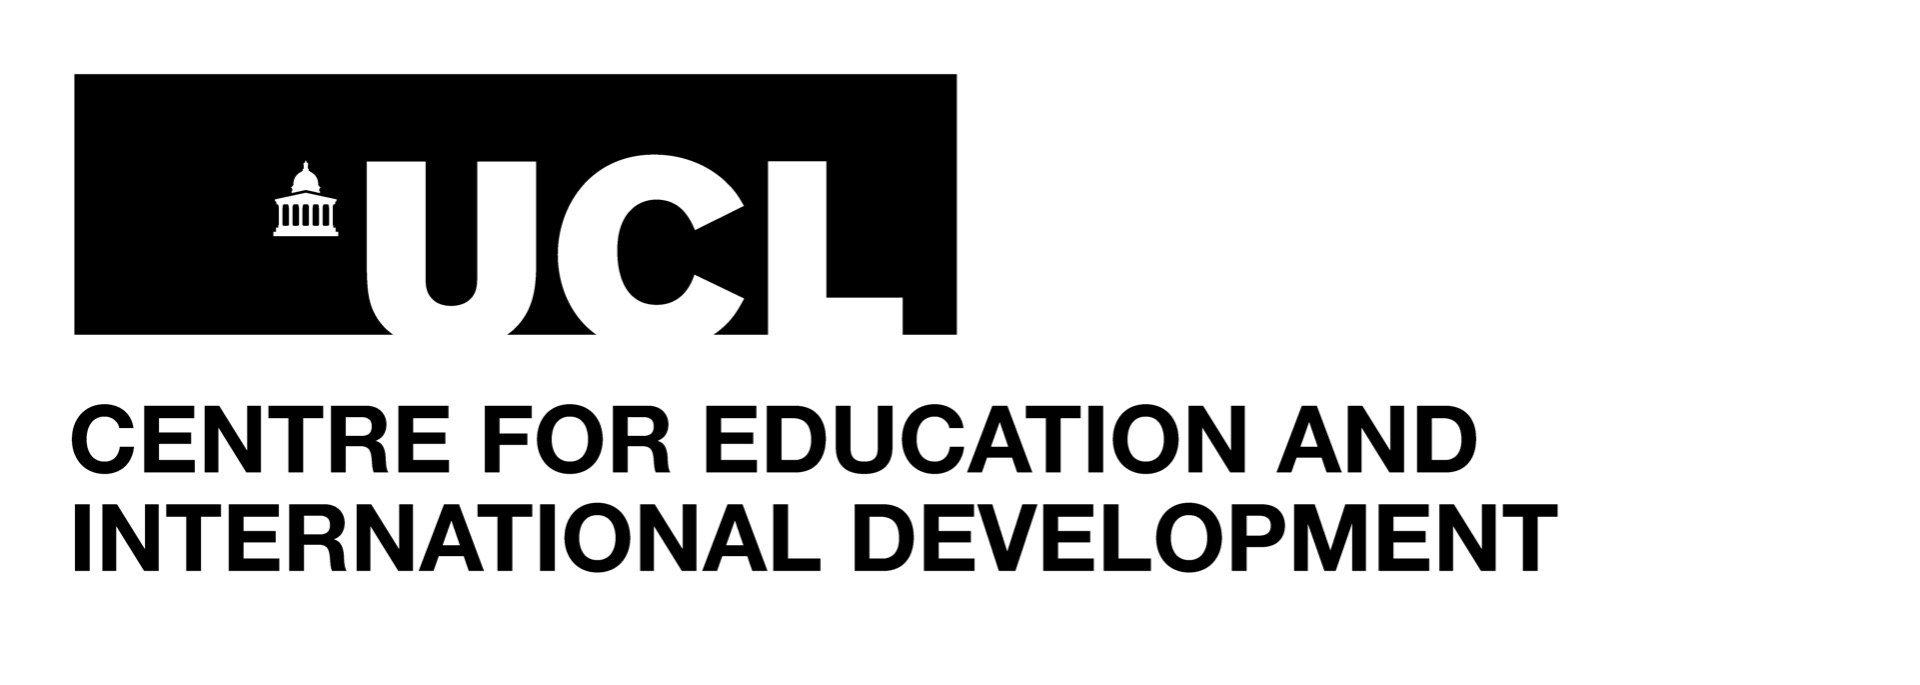 Centre for Education and International Development blog